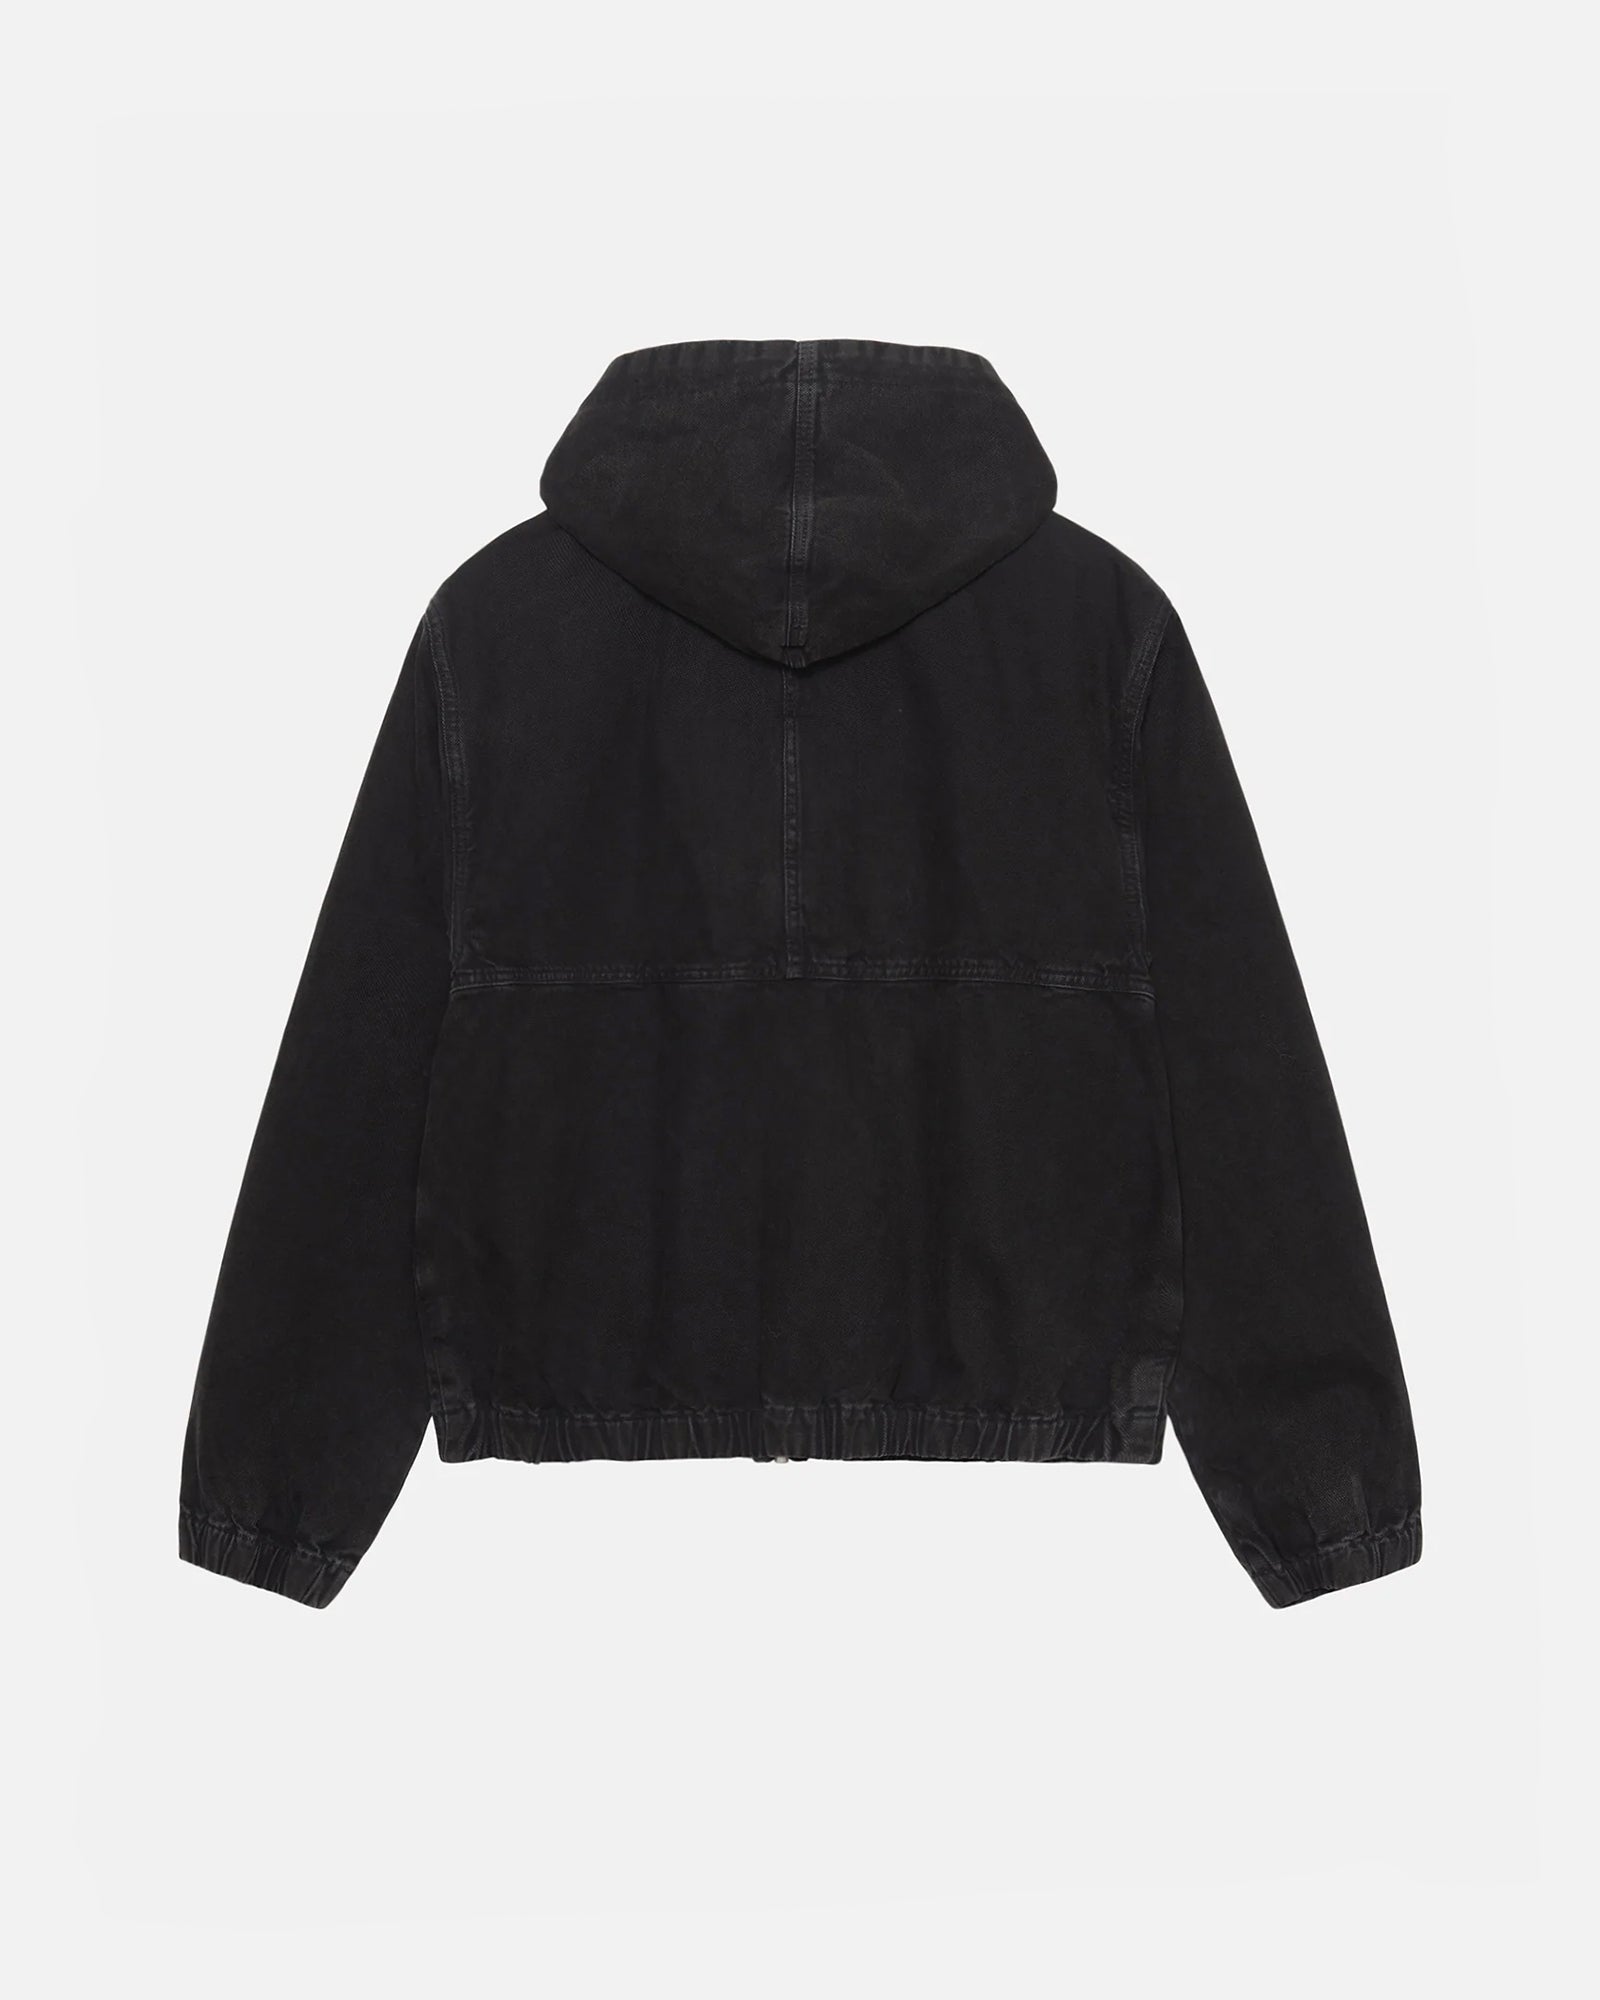 Work Jacket Insulated Canvas in black – Stüssy Japan